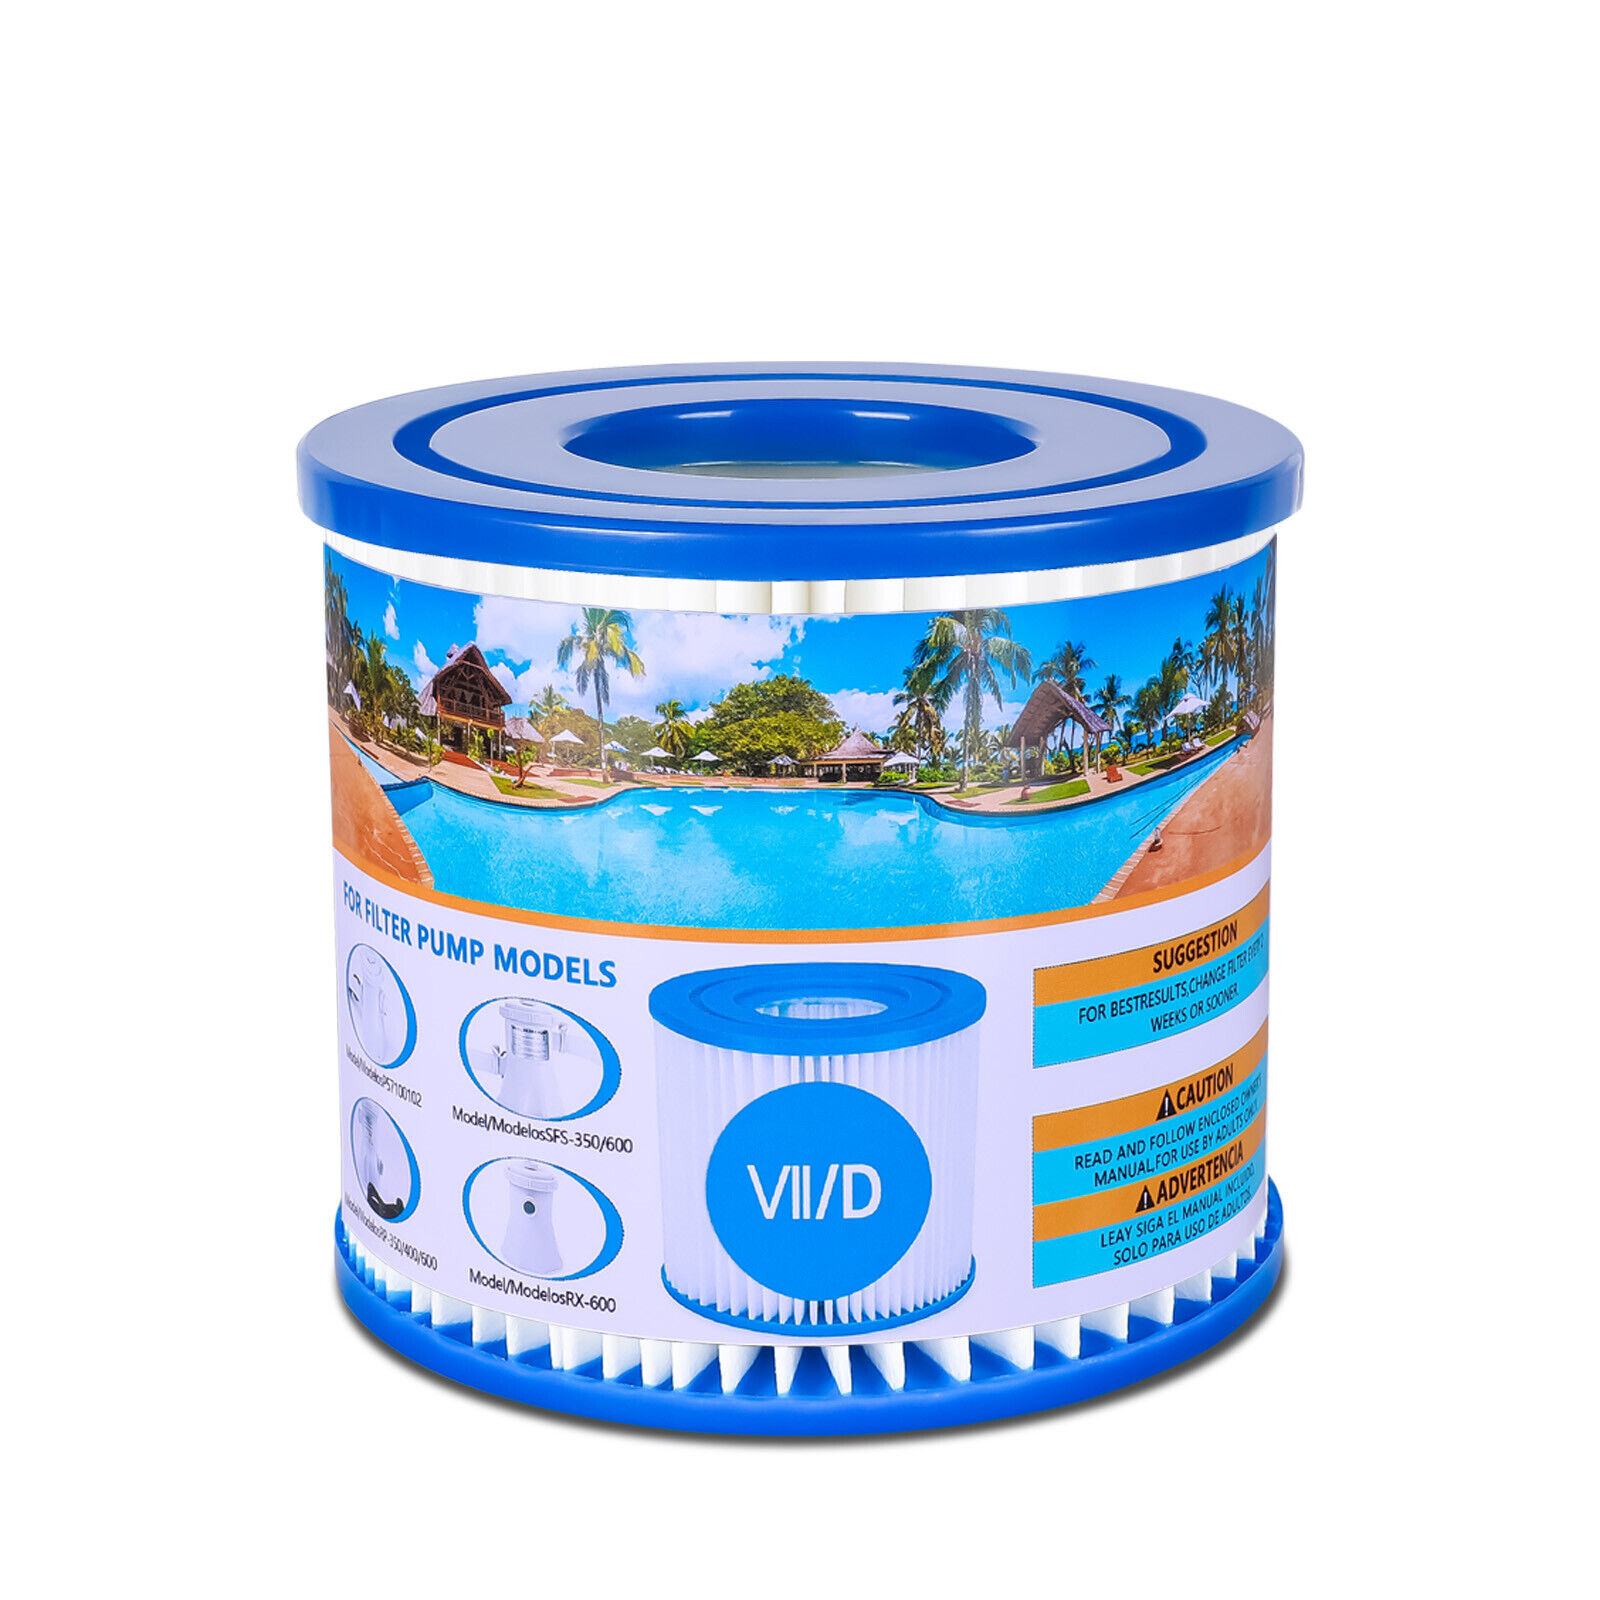 1-6 Pack Swimming Pool Filter for Intex Type D/VII Pump Filter System Cartridge